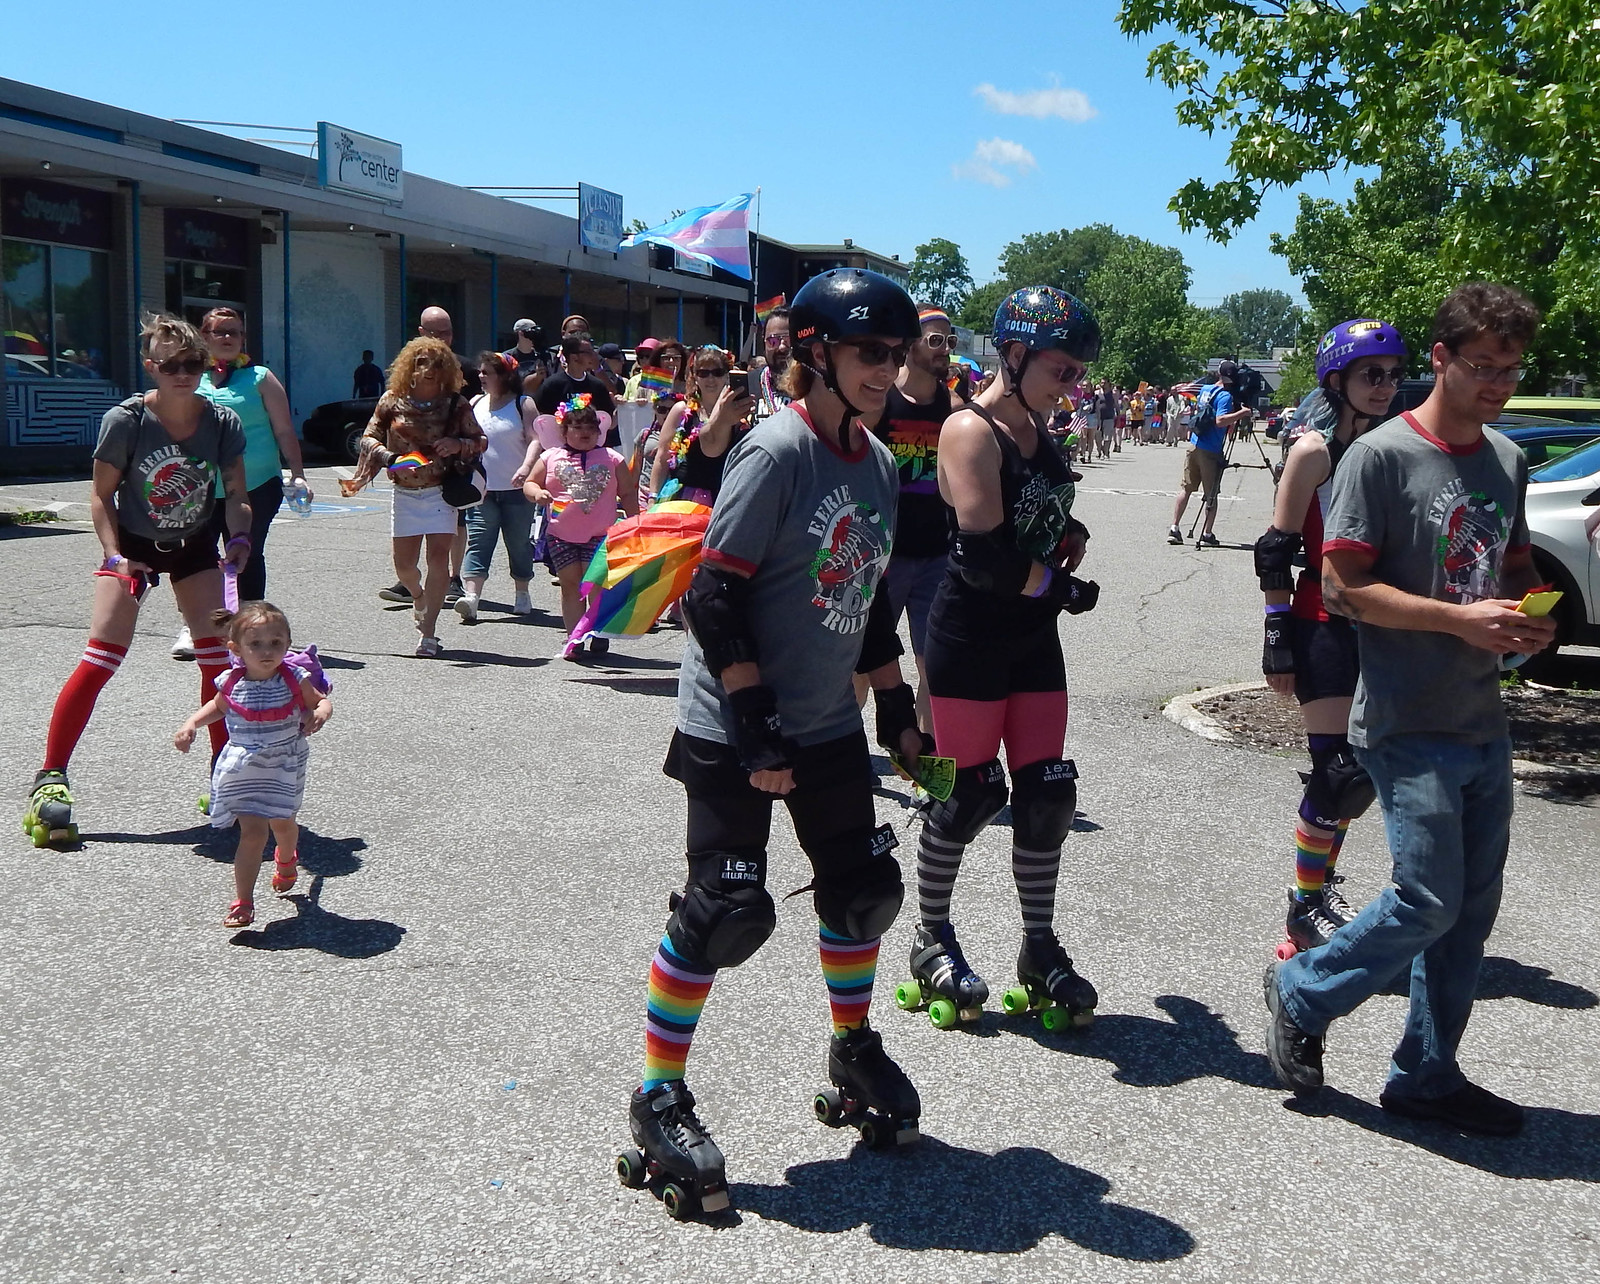 Eerie Roller Girls in Pride Parade